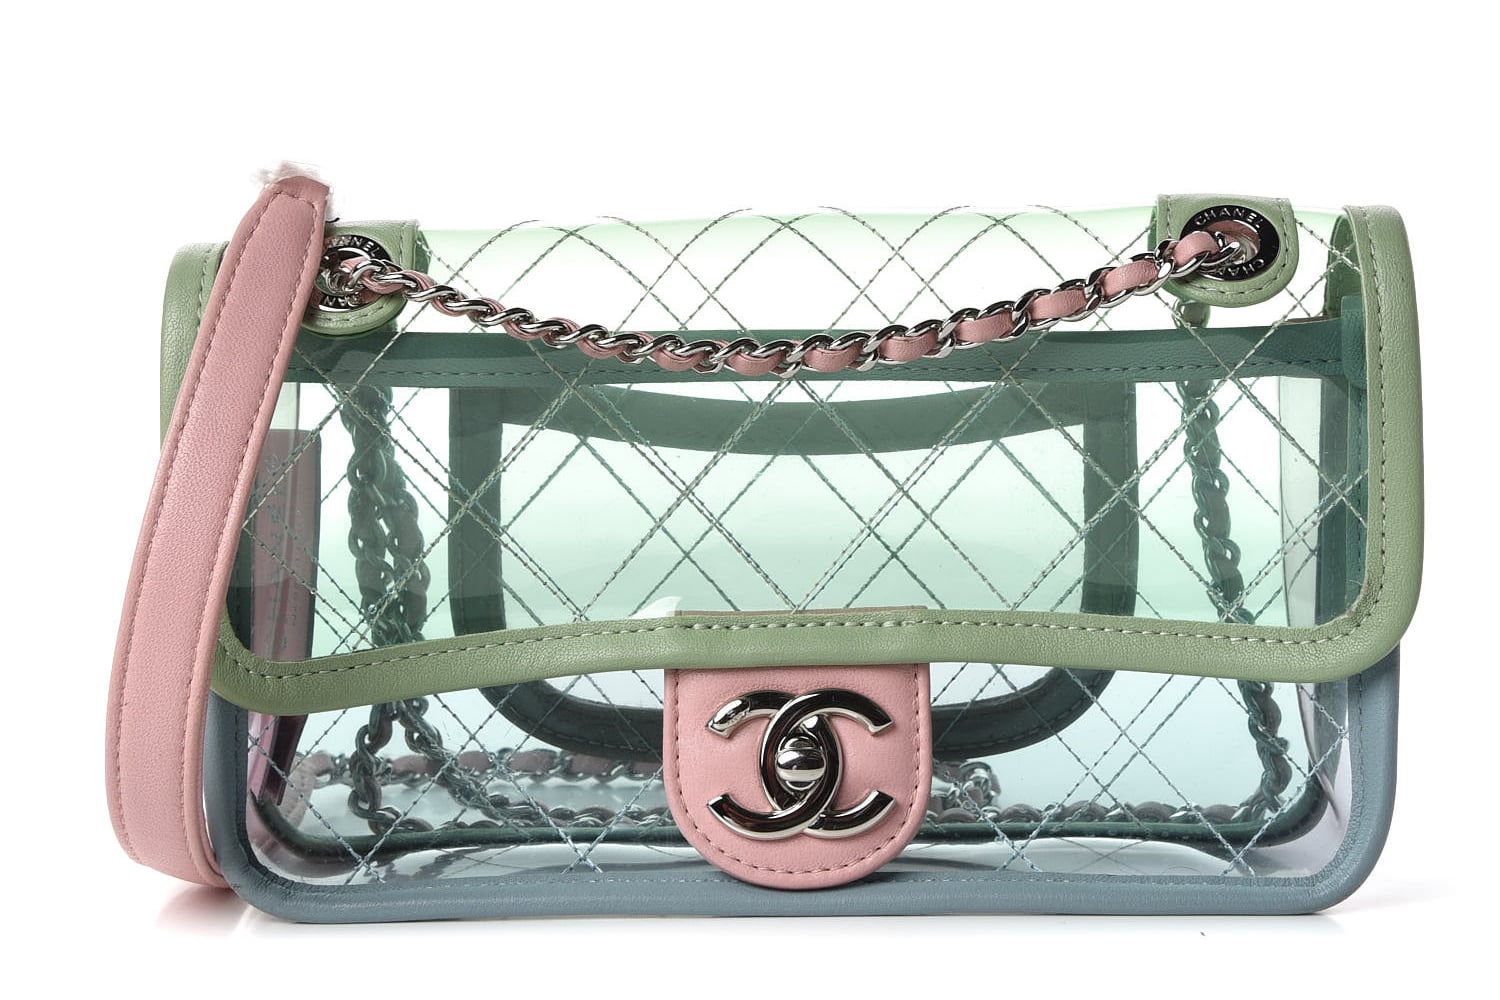 110 Chanel ideas  chanel, chanel bag, chanel handbags